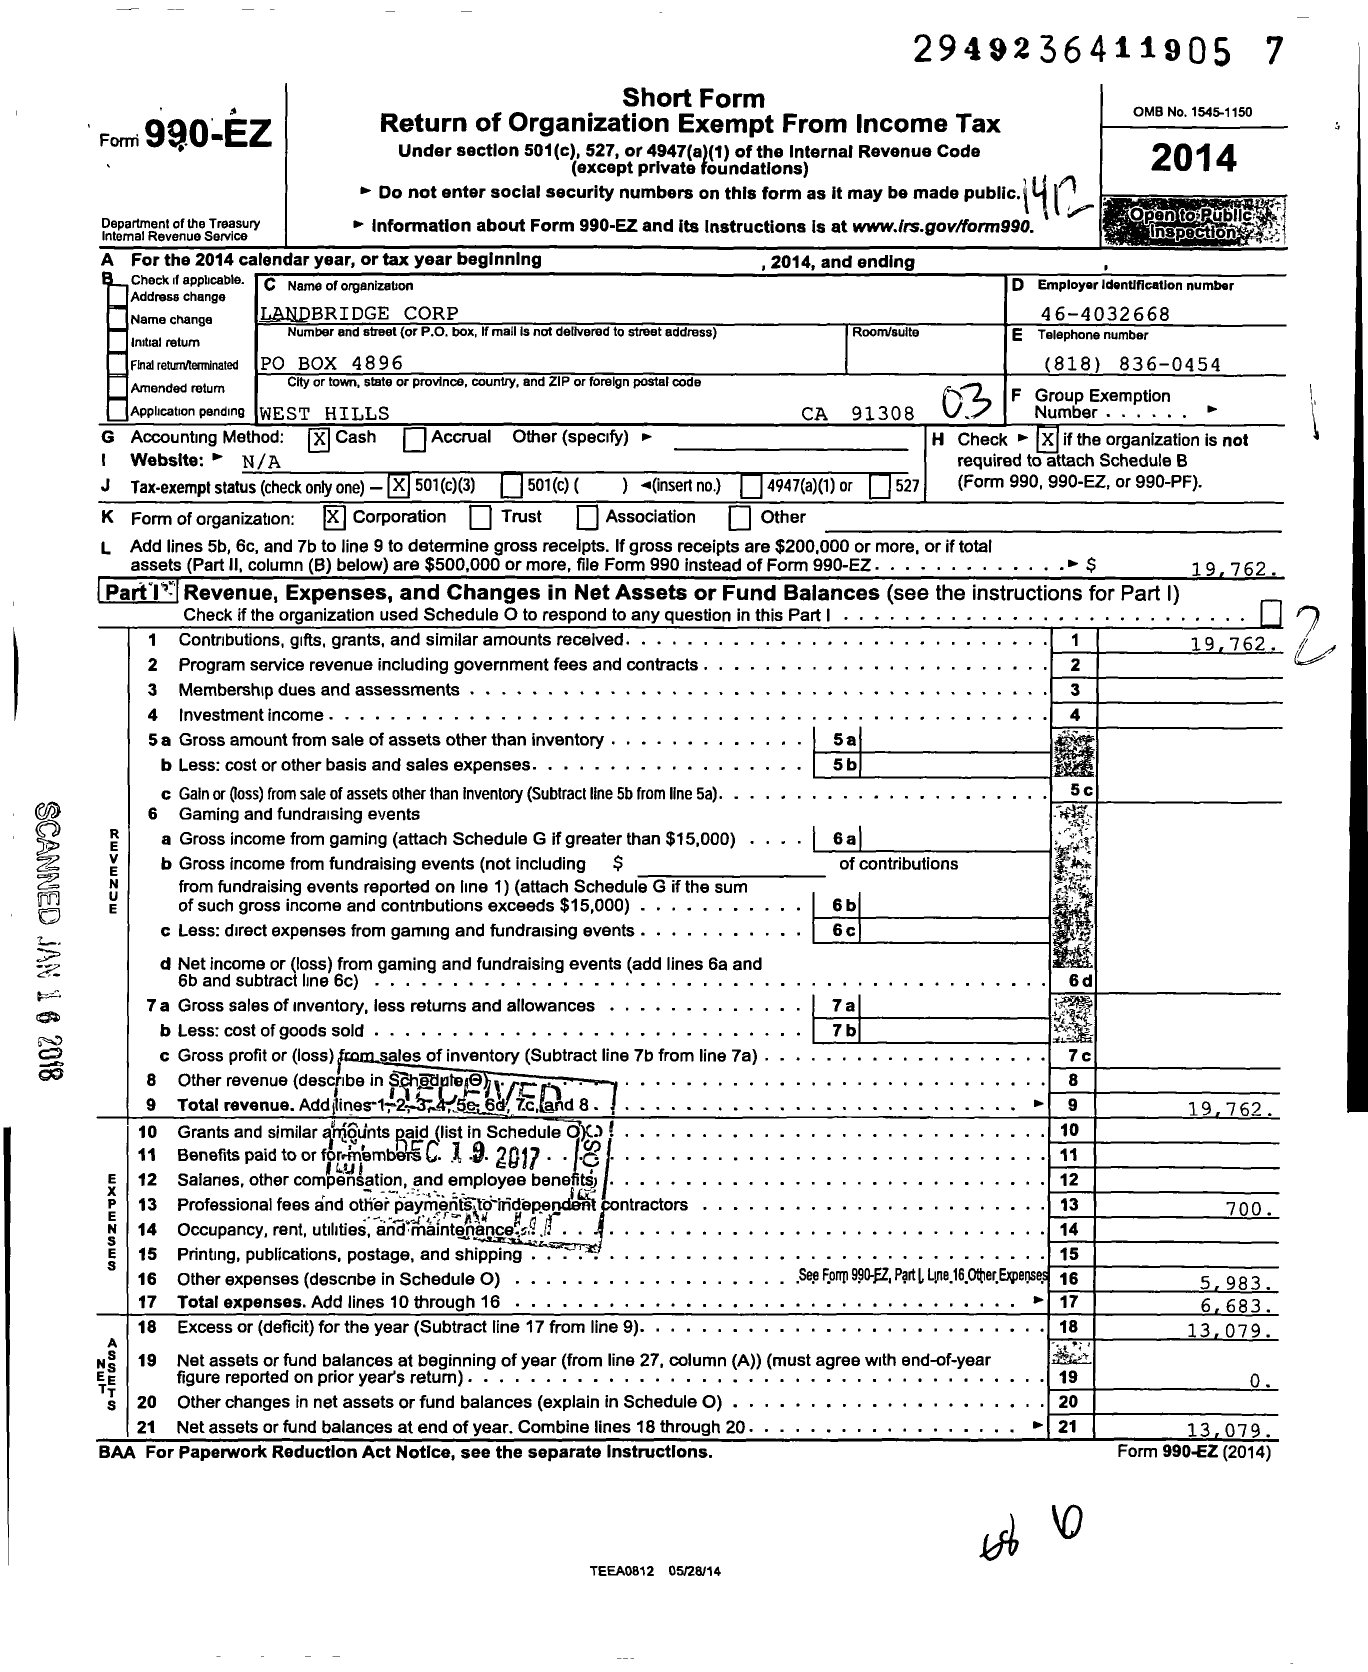 Image of first page of 2014 Form 990EZ for Landbridge Corporation